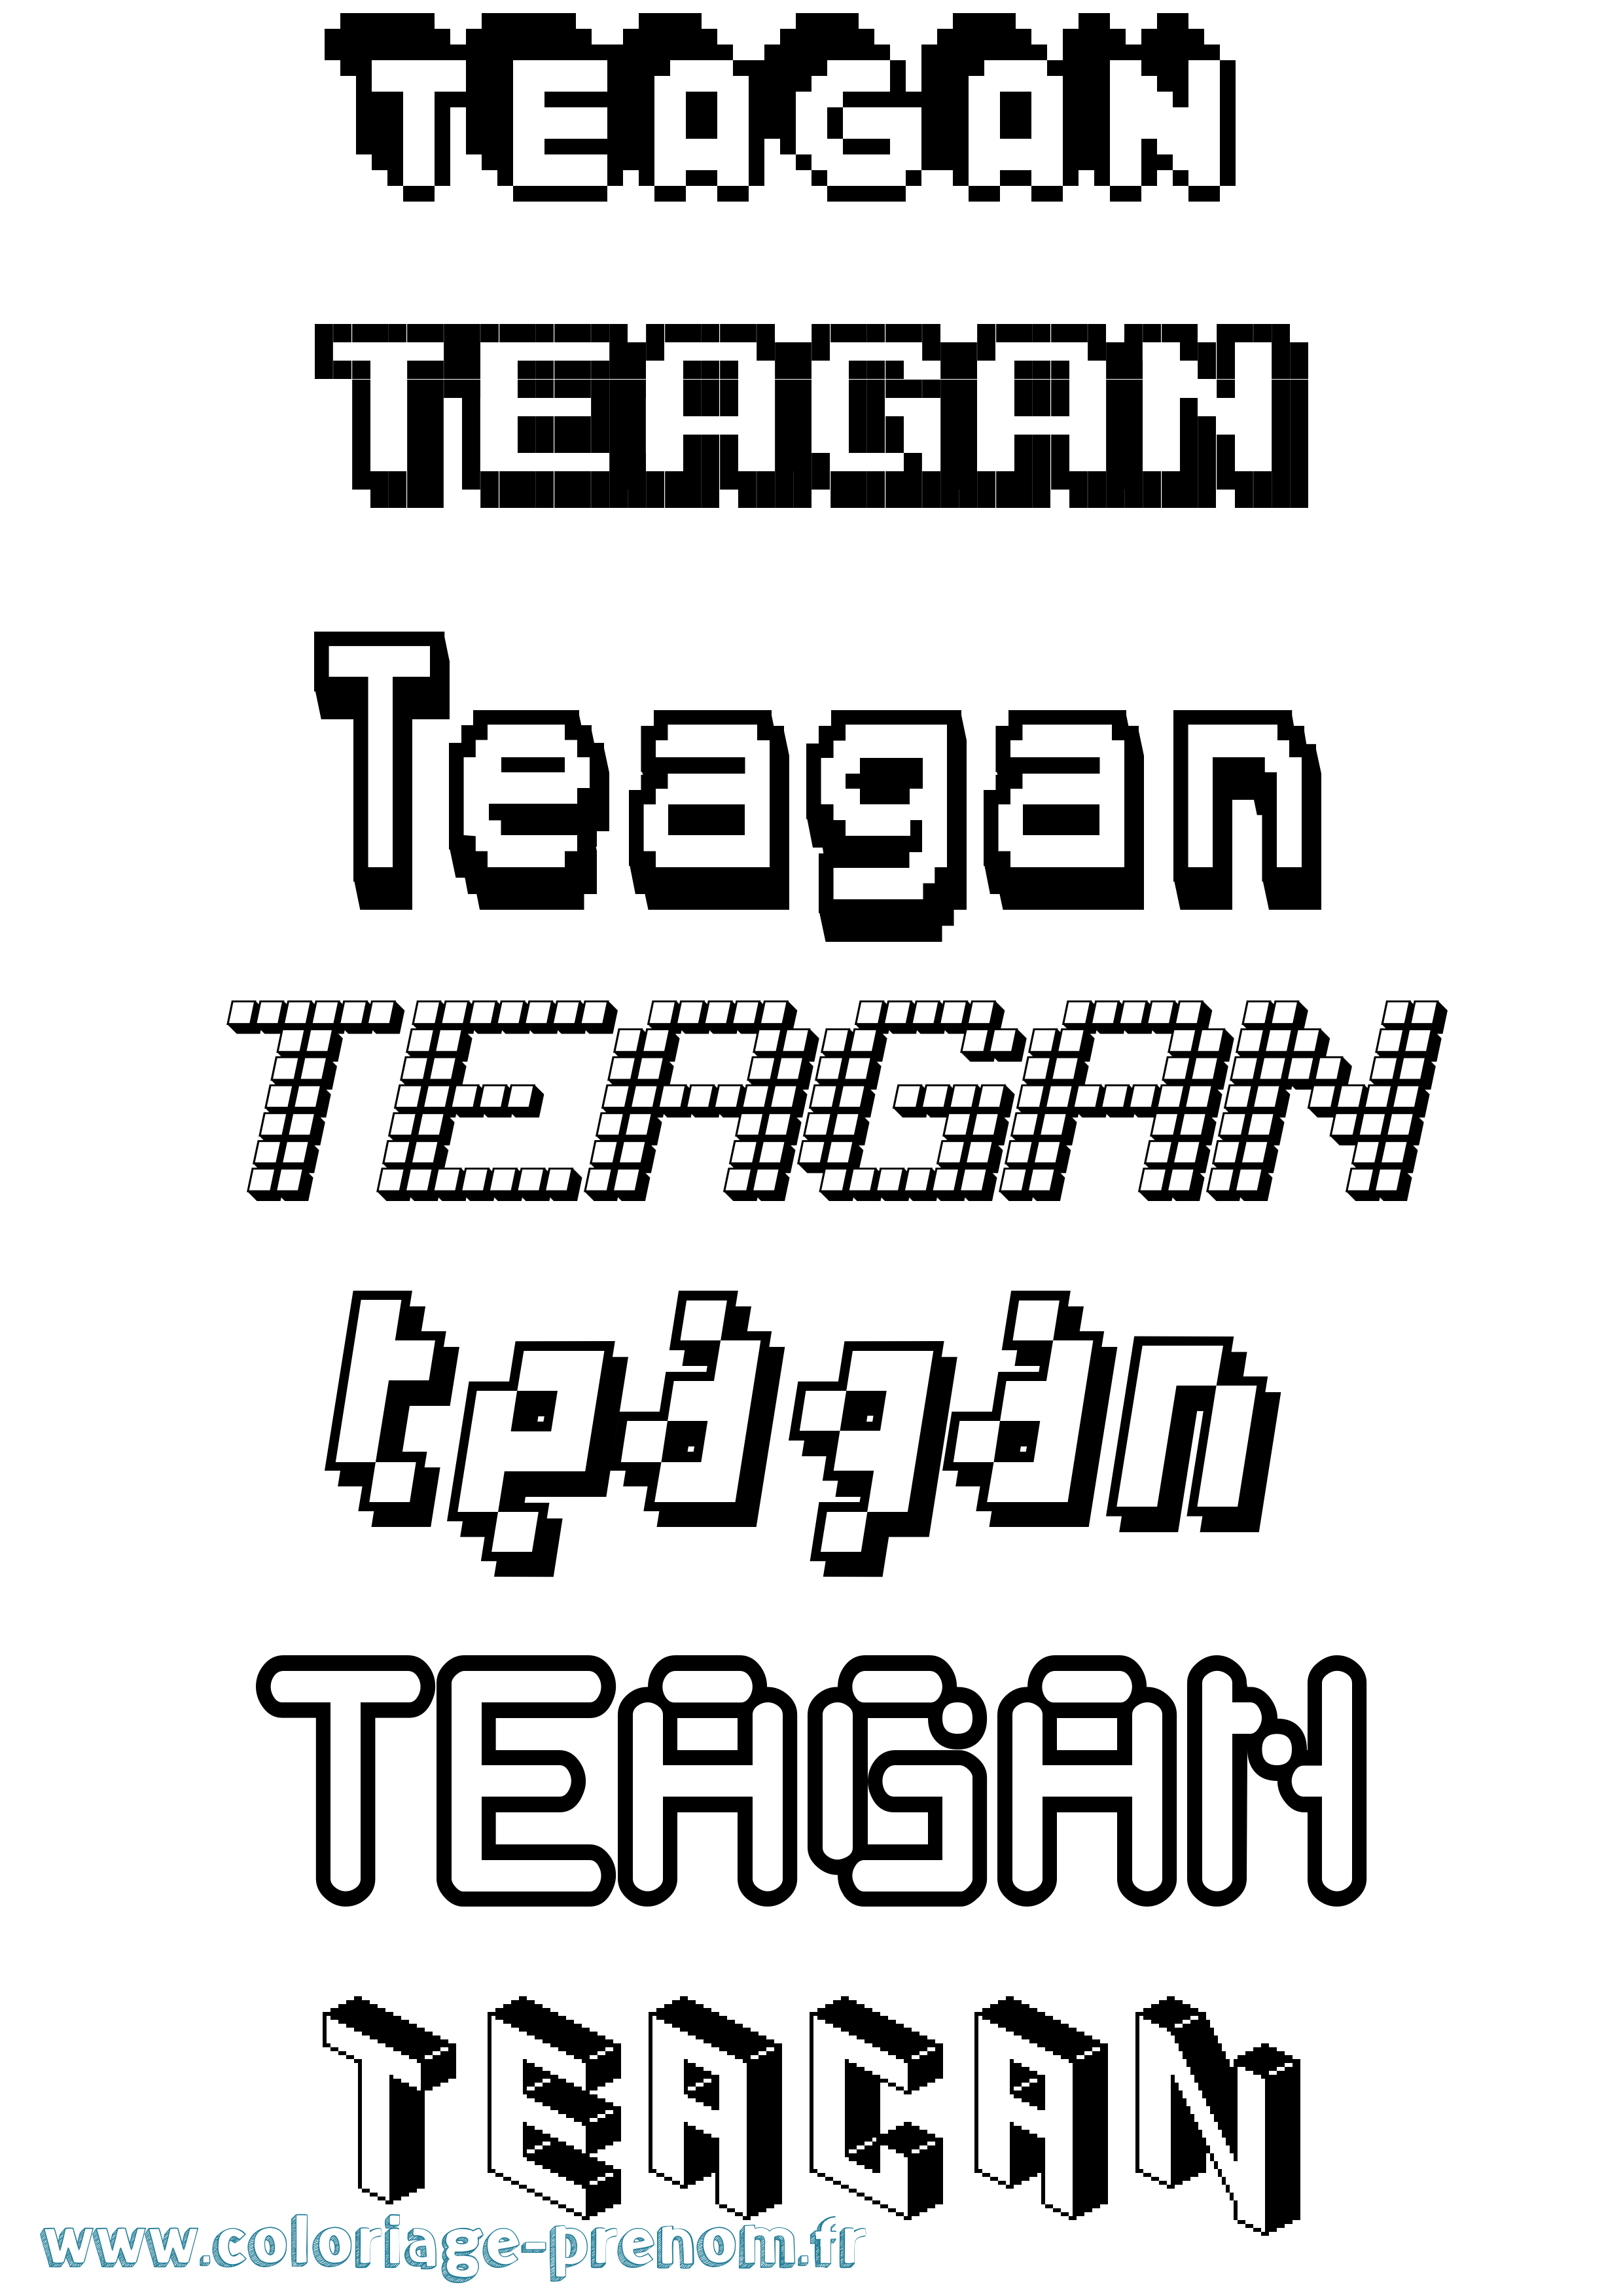 Coloriage prénom Teagan Pixel